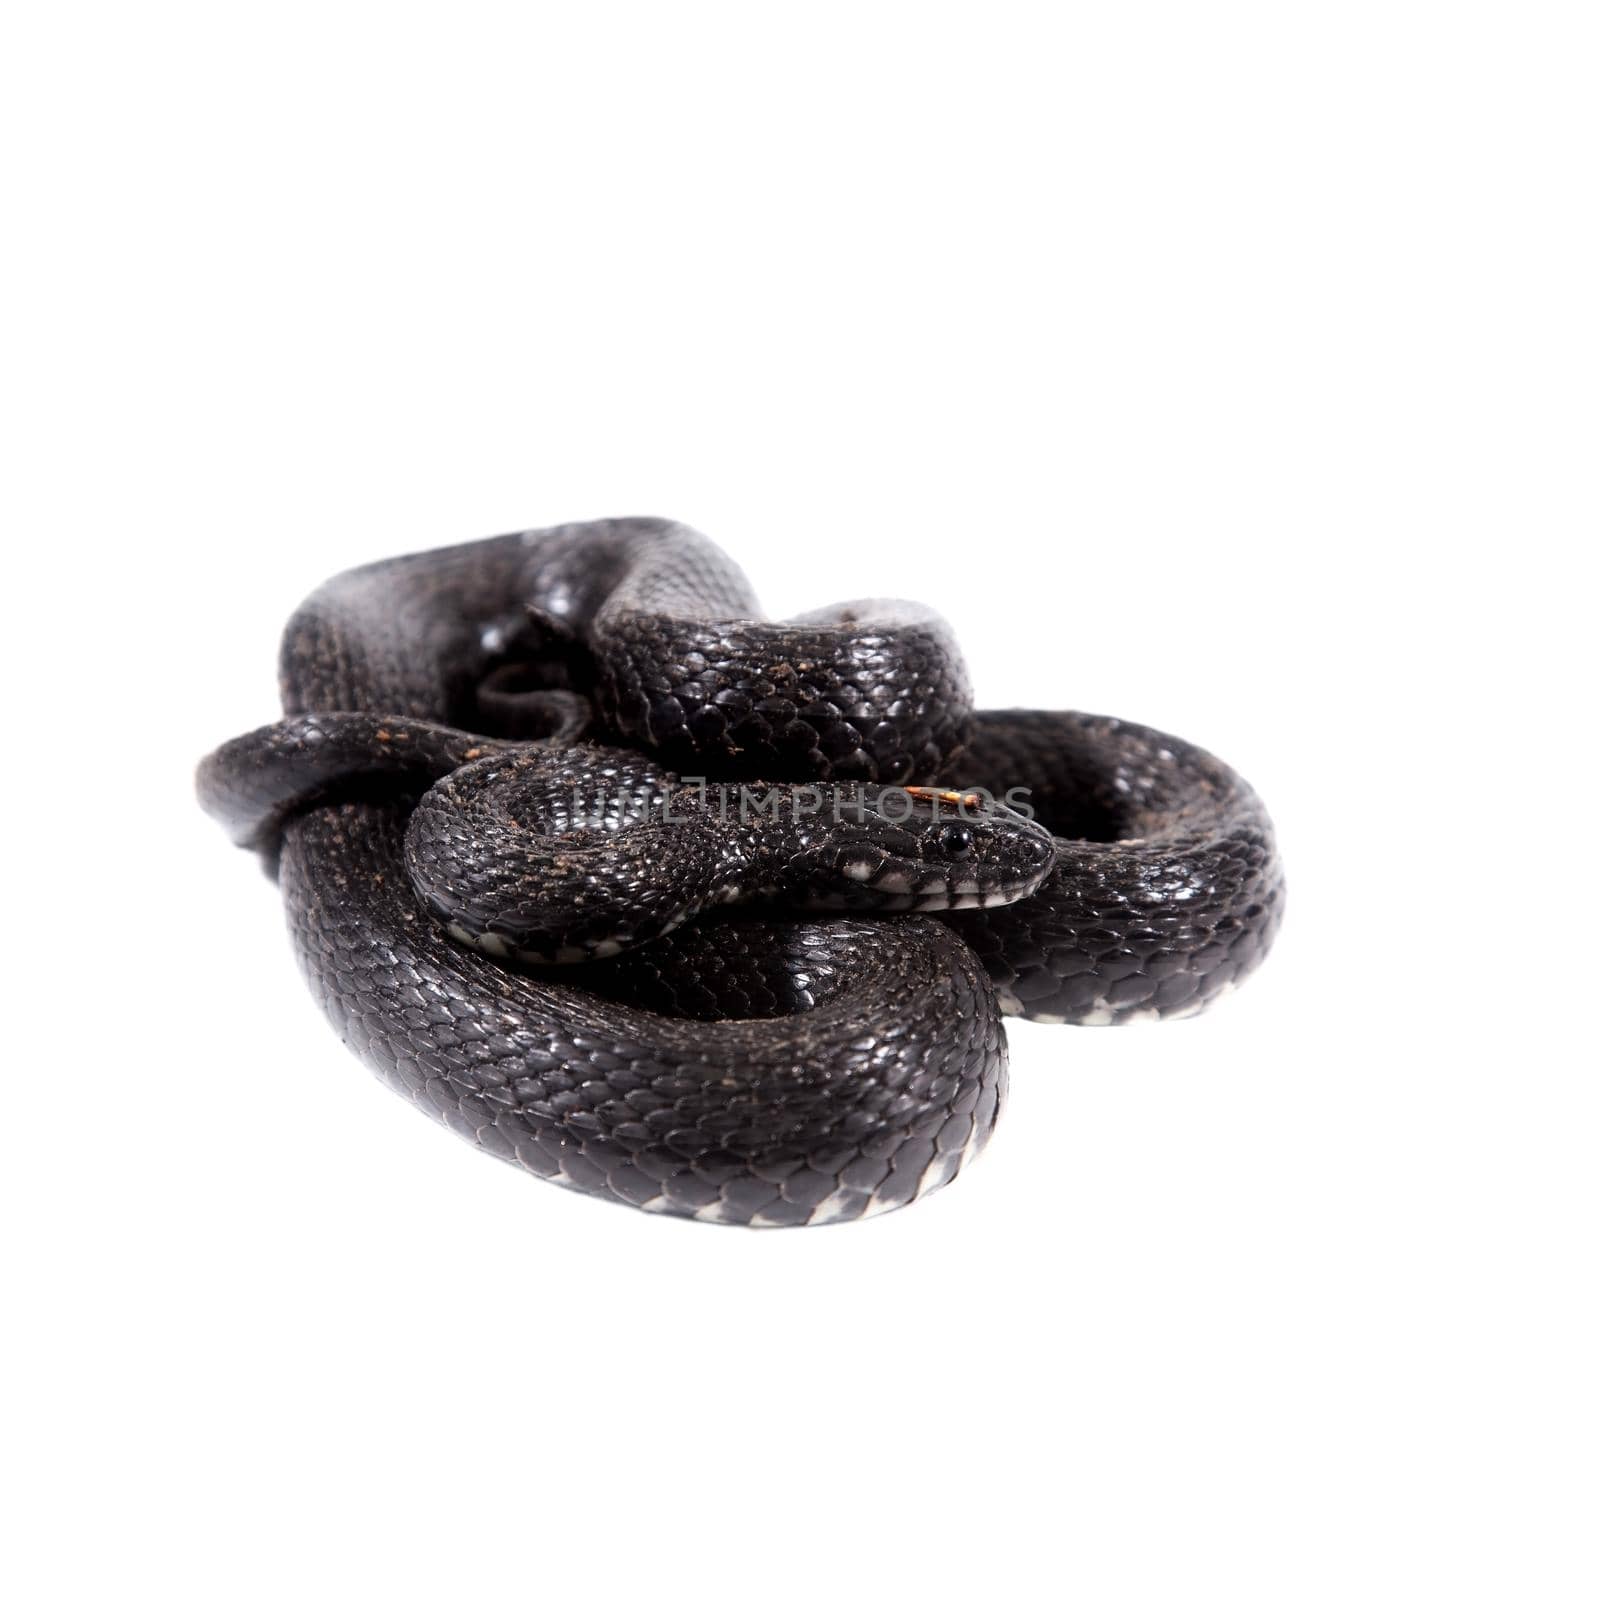 Dice snake, Natrix tessellata, isolated on white background